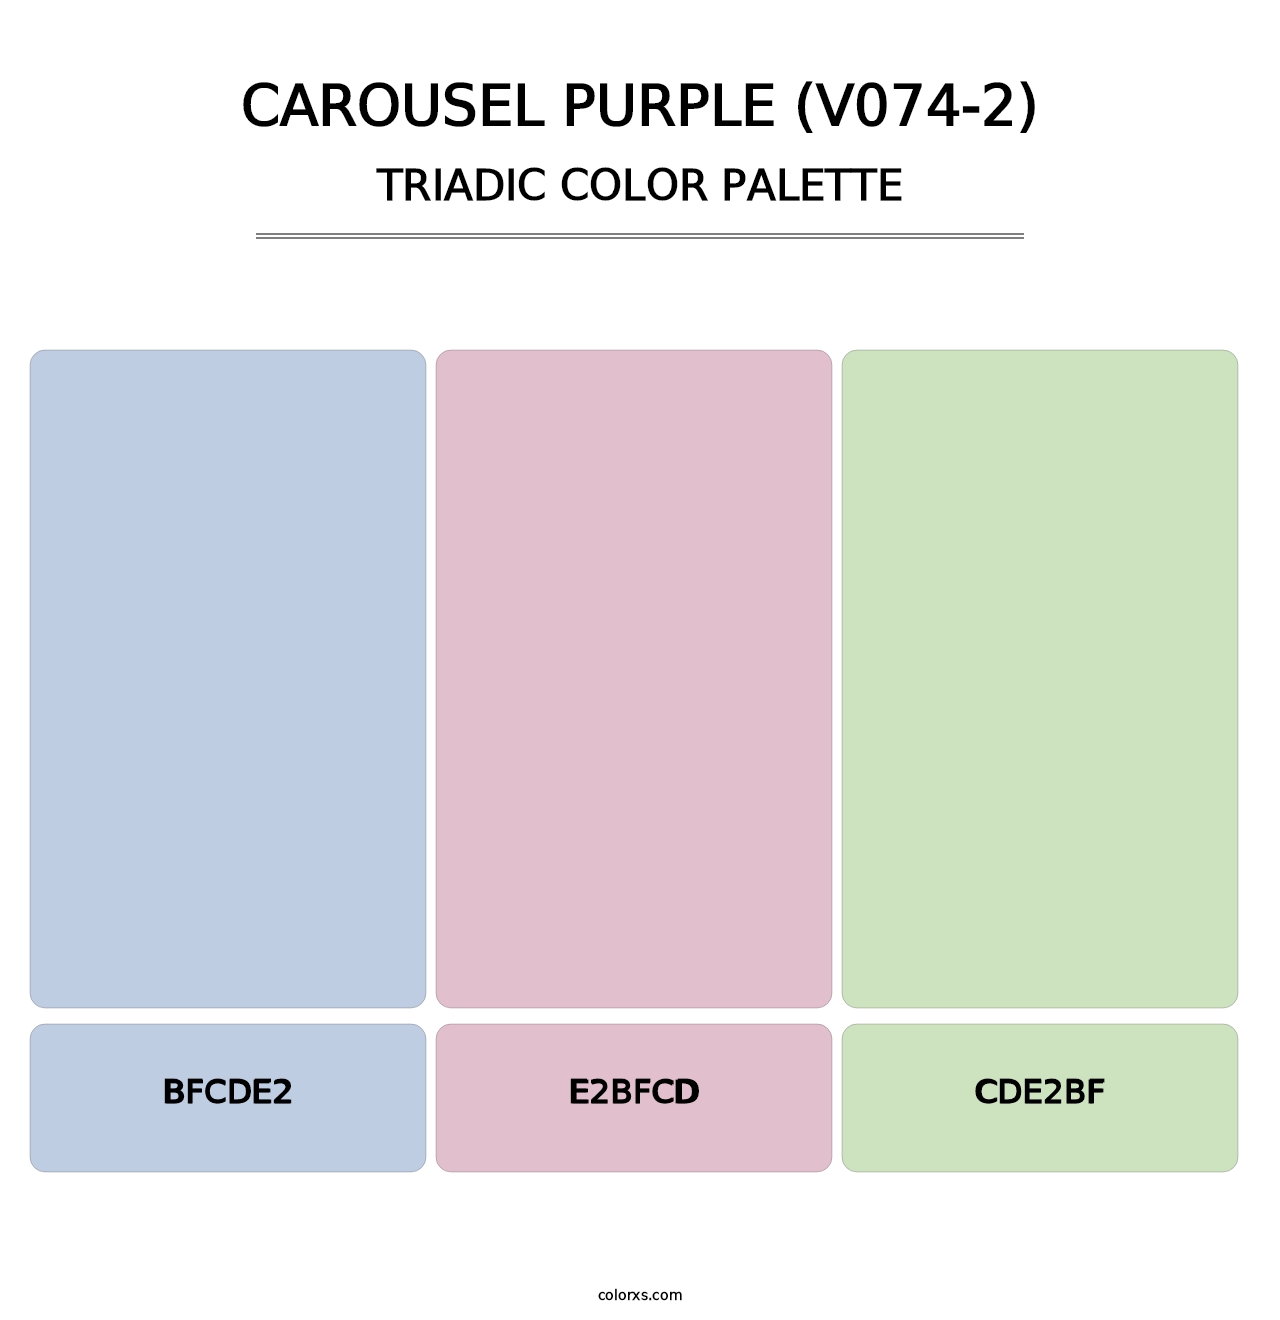 Carousel Purple (V074-2) - Triadic Color Palette